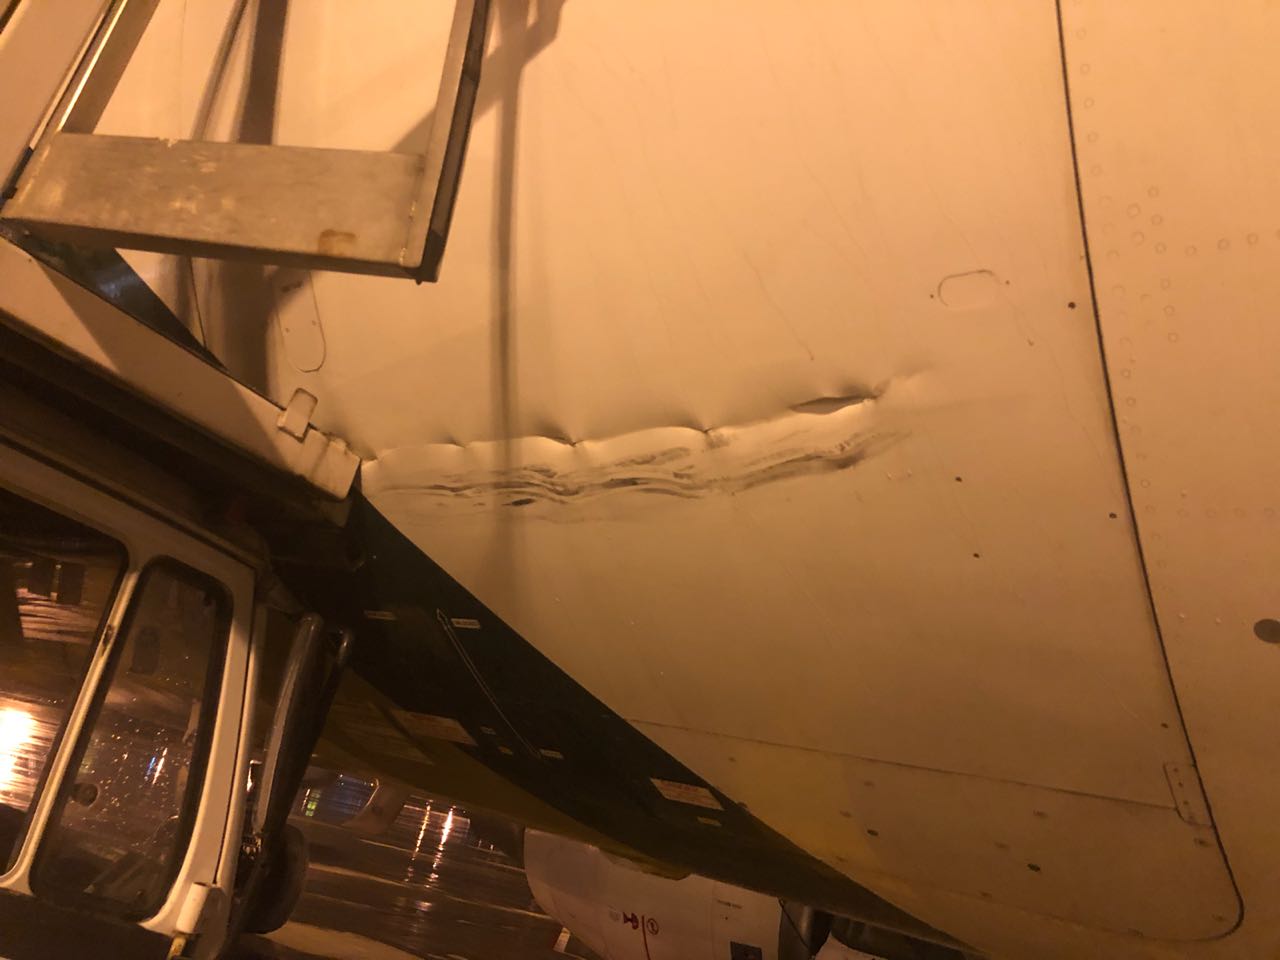 PIA Aircraft Got Hit